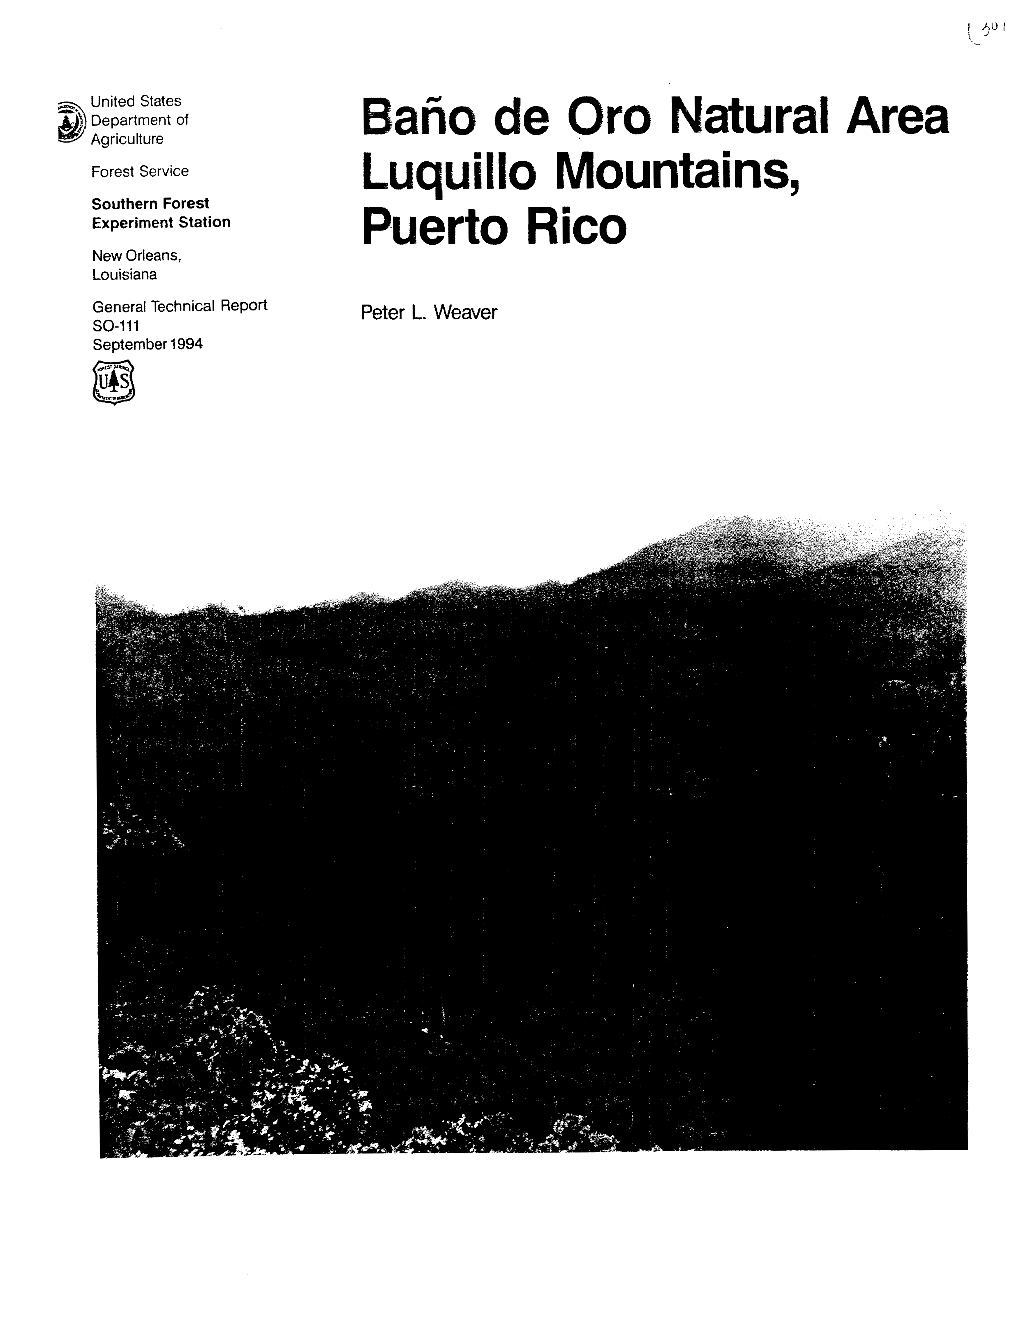 Luquillo Mountains, Puerto Rico